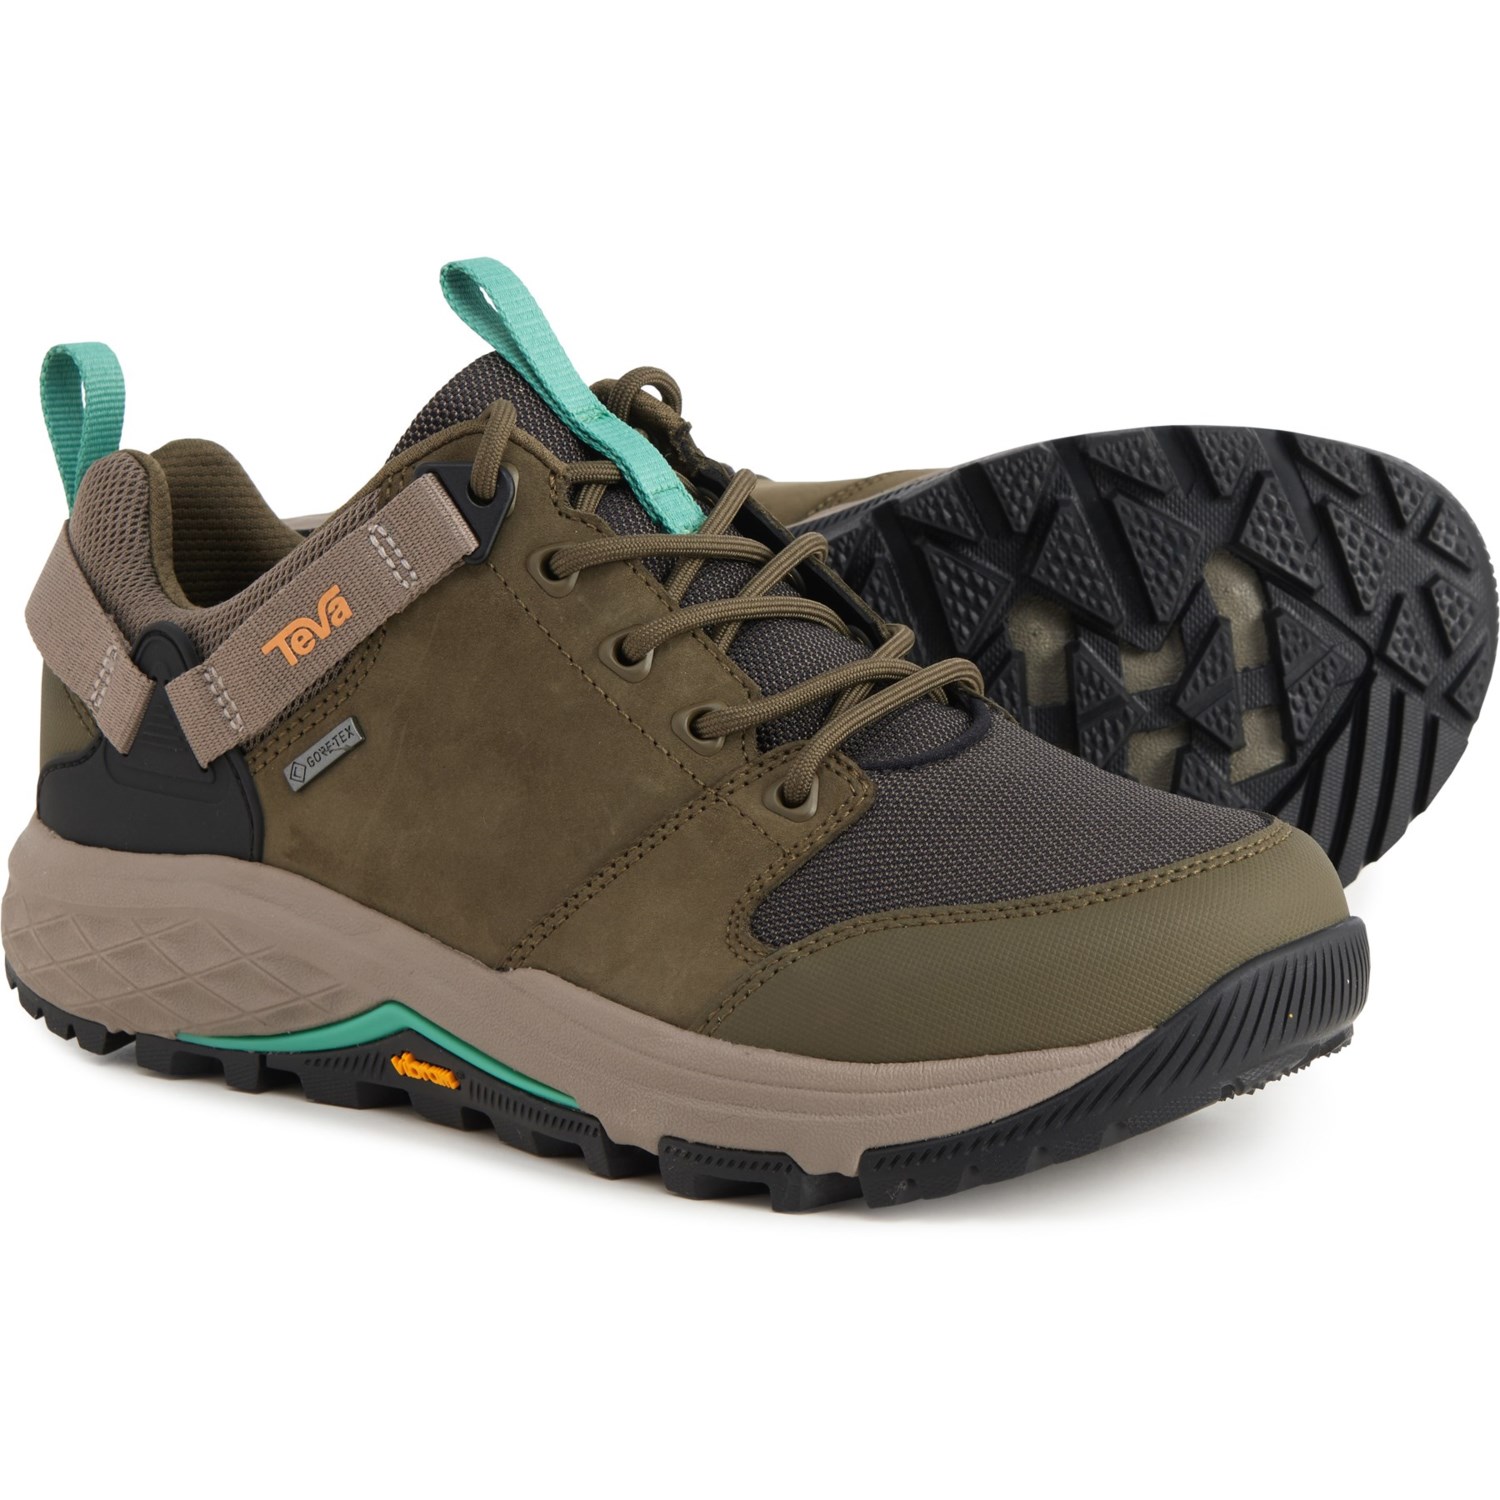 Teva Grandview Gore-Tex® Low Hiking Shoes (For Women) - Save 62%